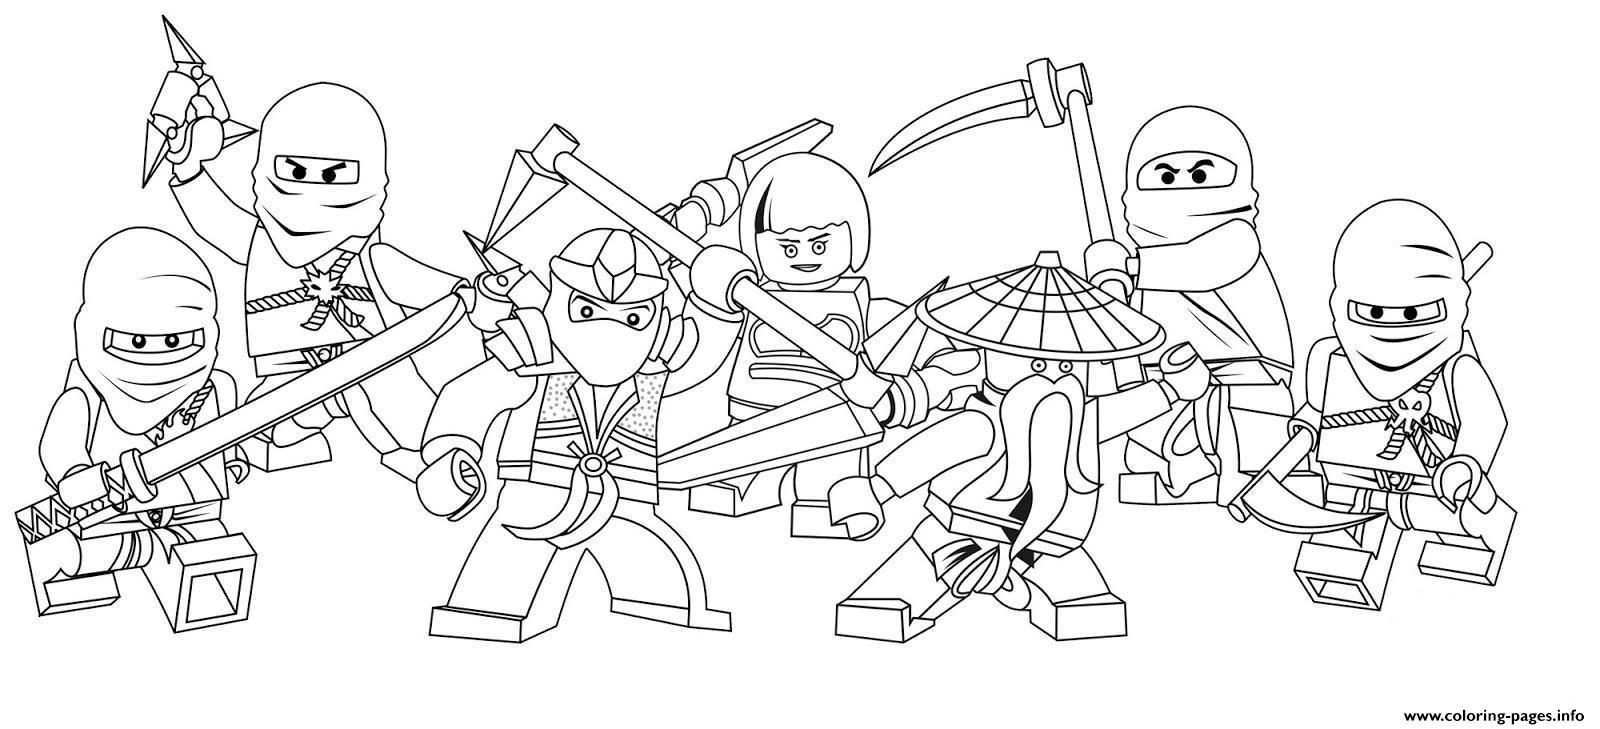 Print Characters Of Ninjago Secc8 Coloring Pages In 2021 Ninjago Coloring Pages Lego